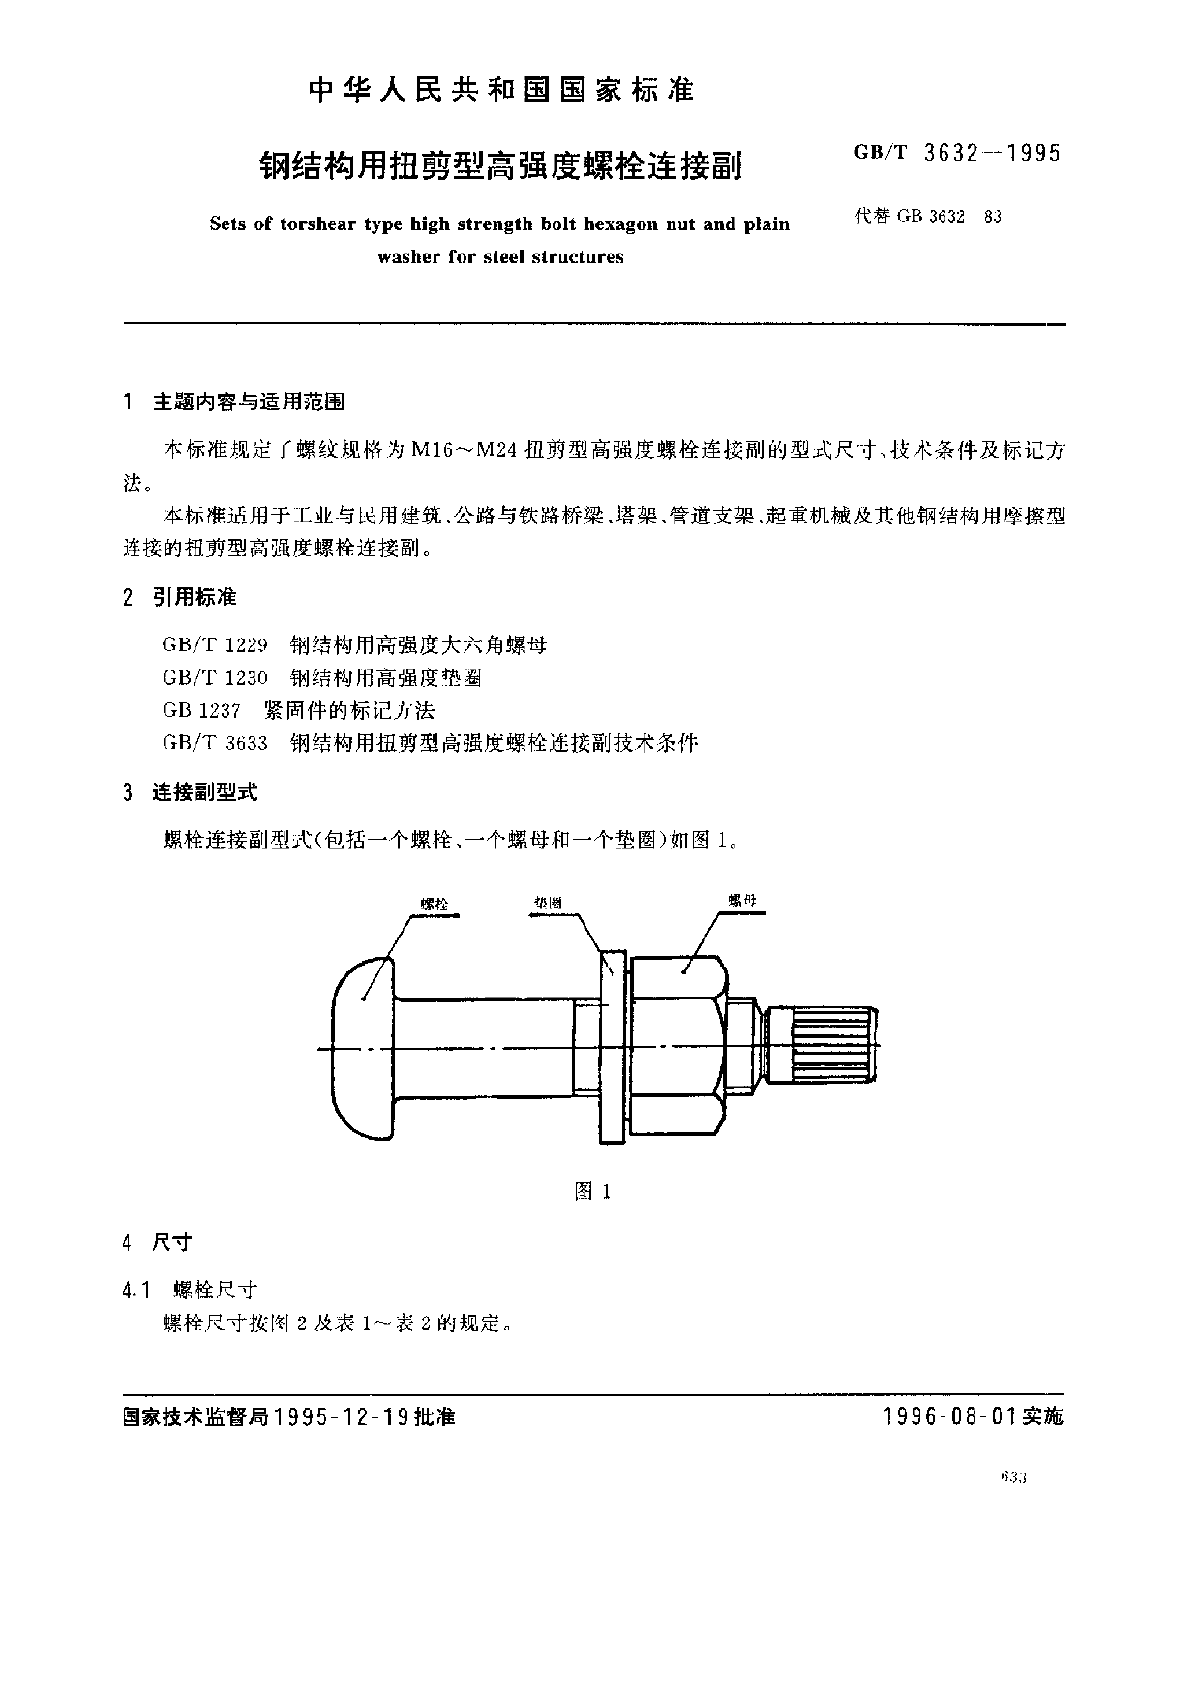 GB 3632-1995 钢结构用扭剪型高强度螺栓连接副（T）